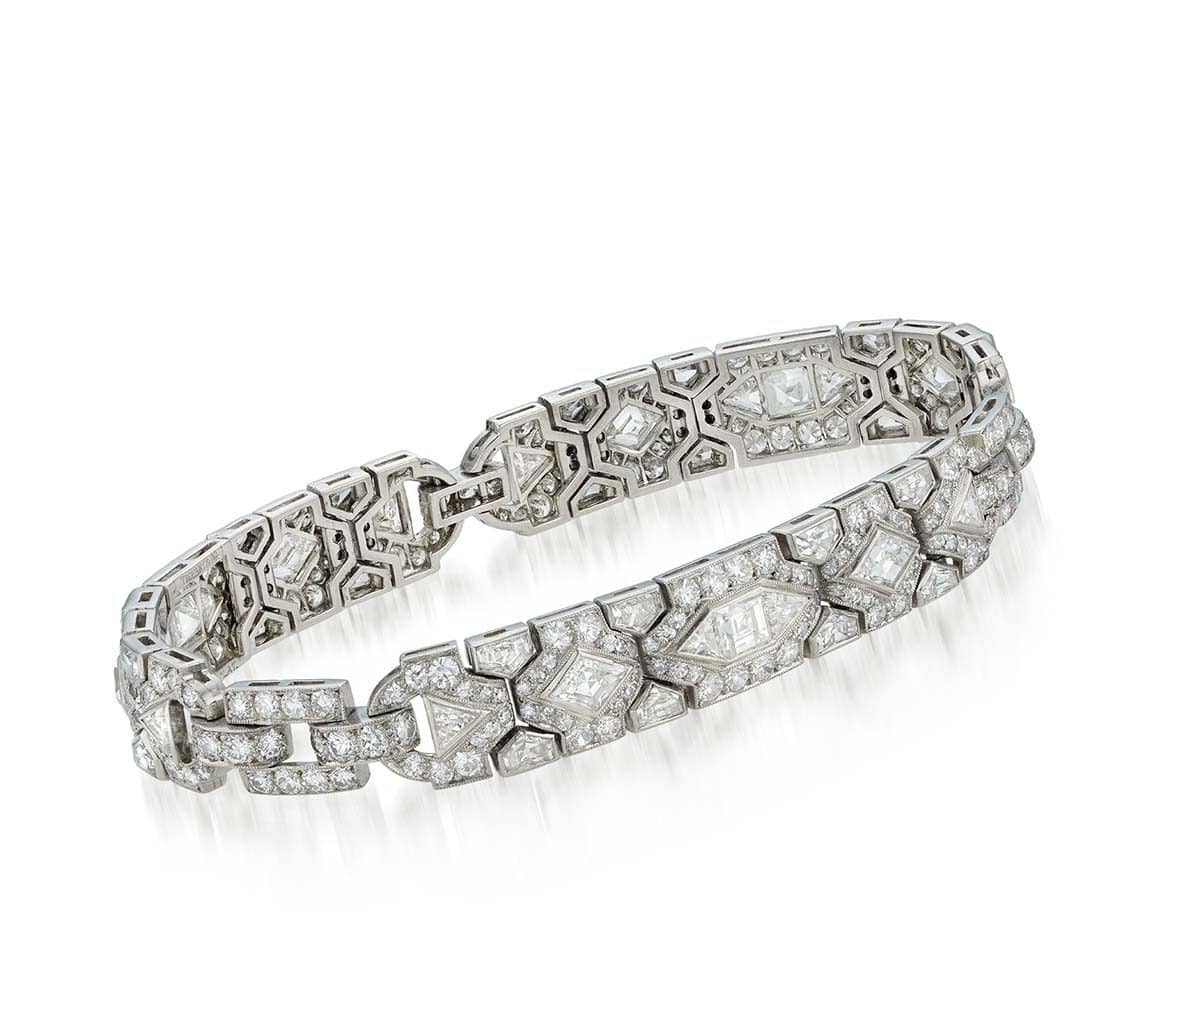 Available Jewels Tiffany art deco bracelet